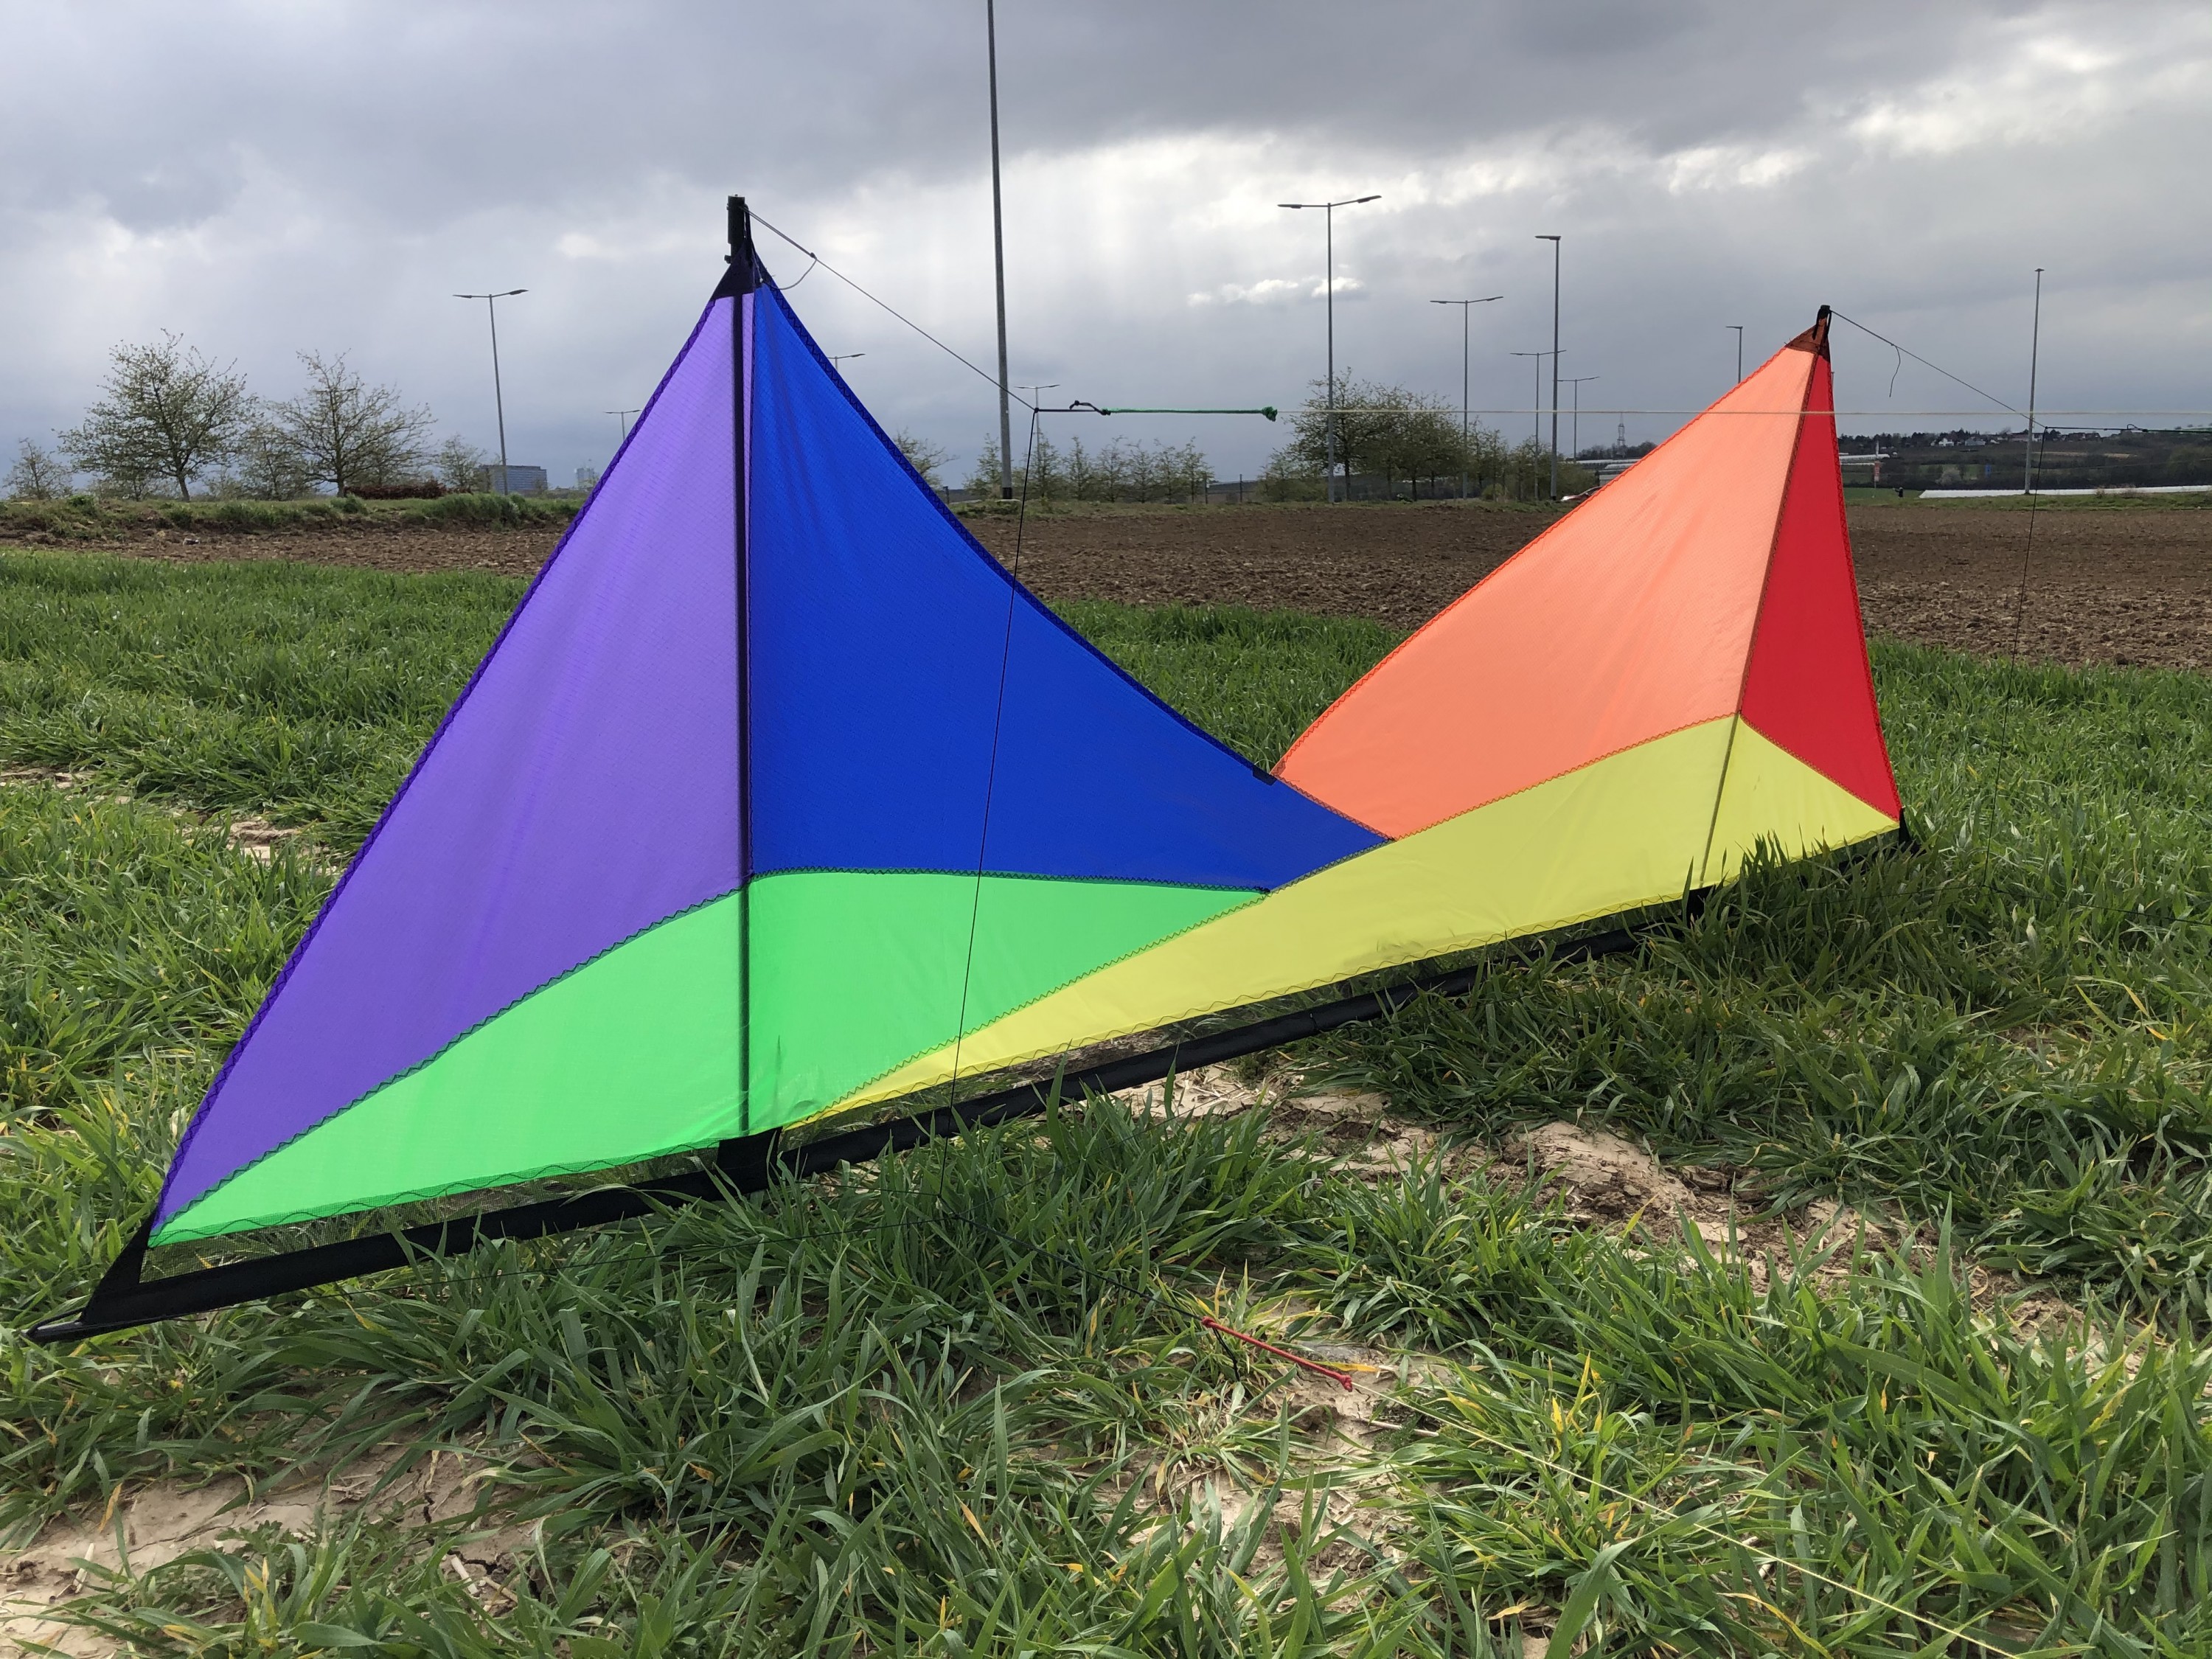 Projekt KaC "Kites against Corona"